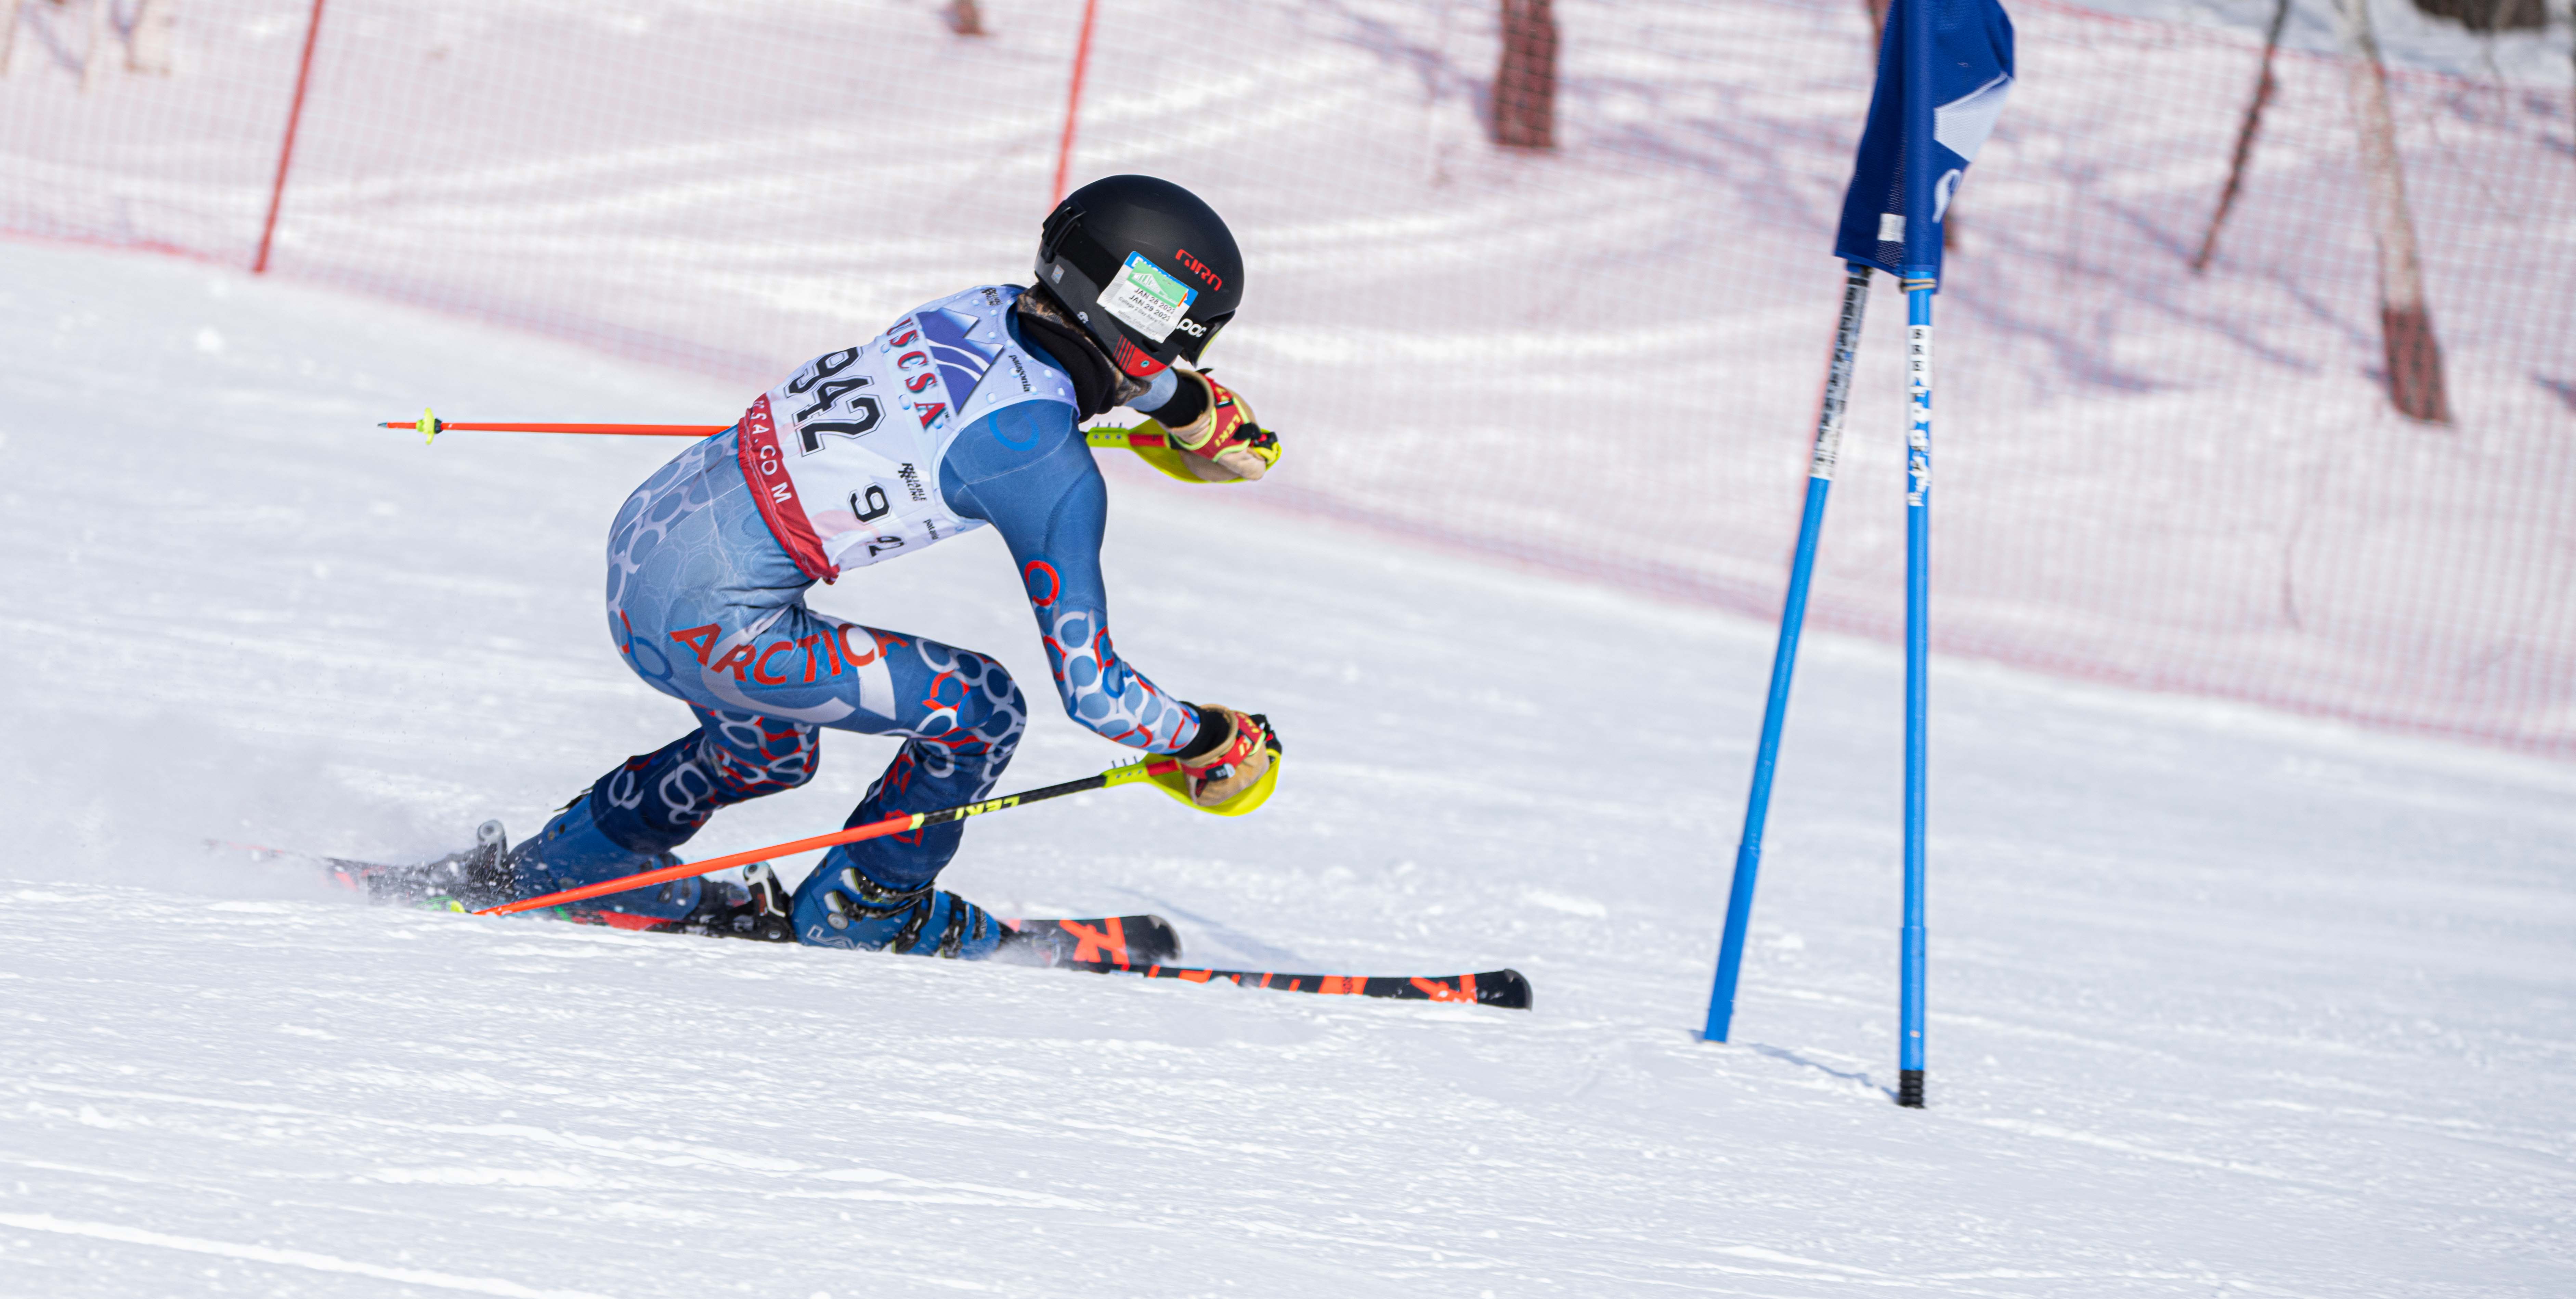 alpine skier approaching a gate